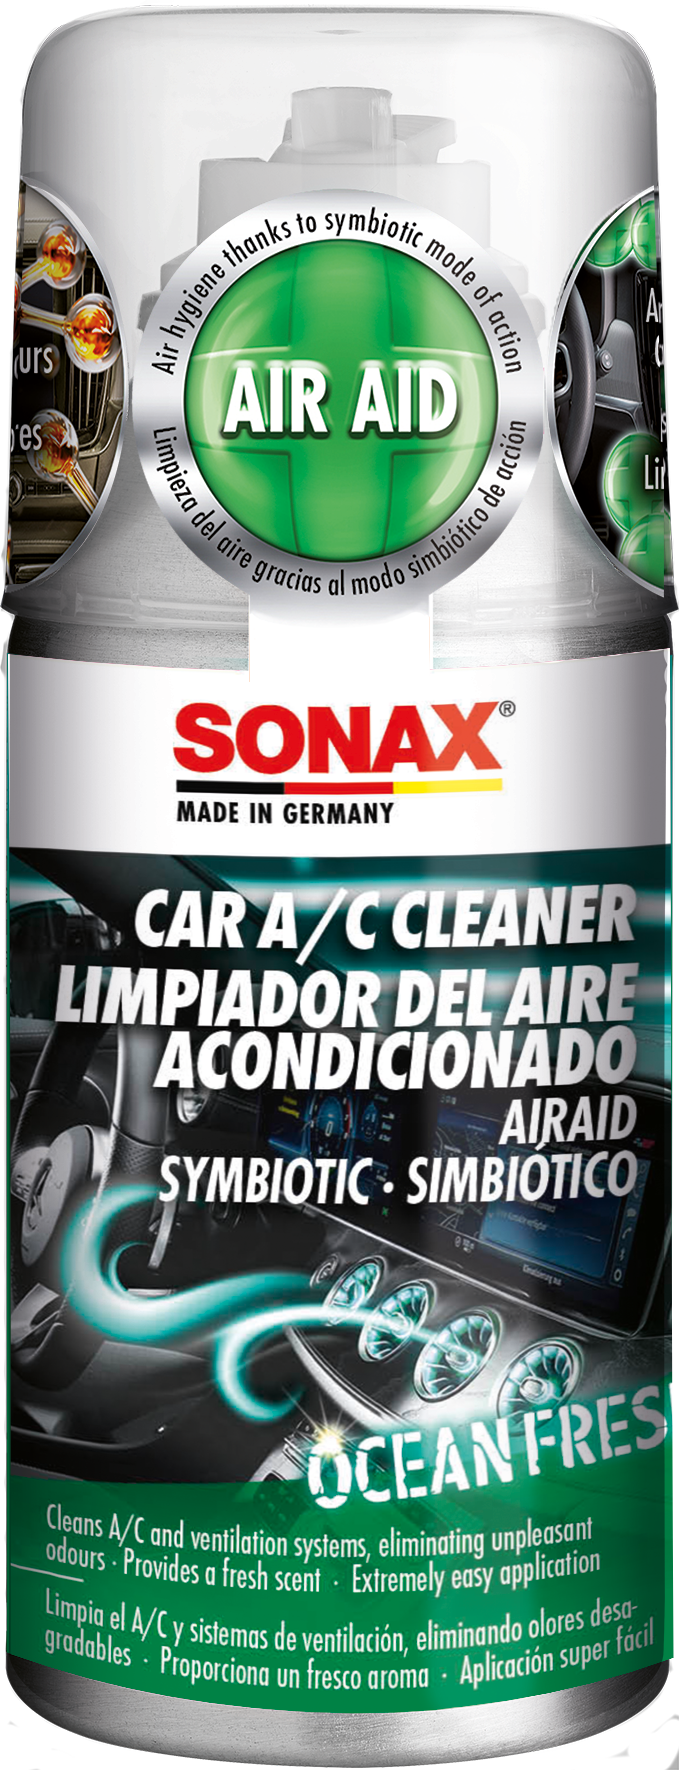 SONAX A/C CLEANER - KlimaPowerCleaner AirAid probiotic